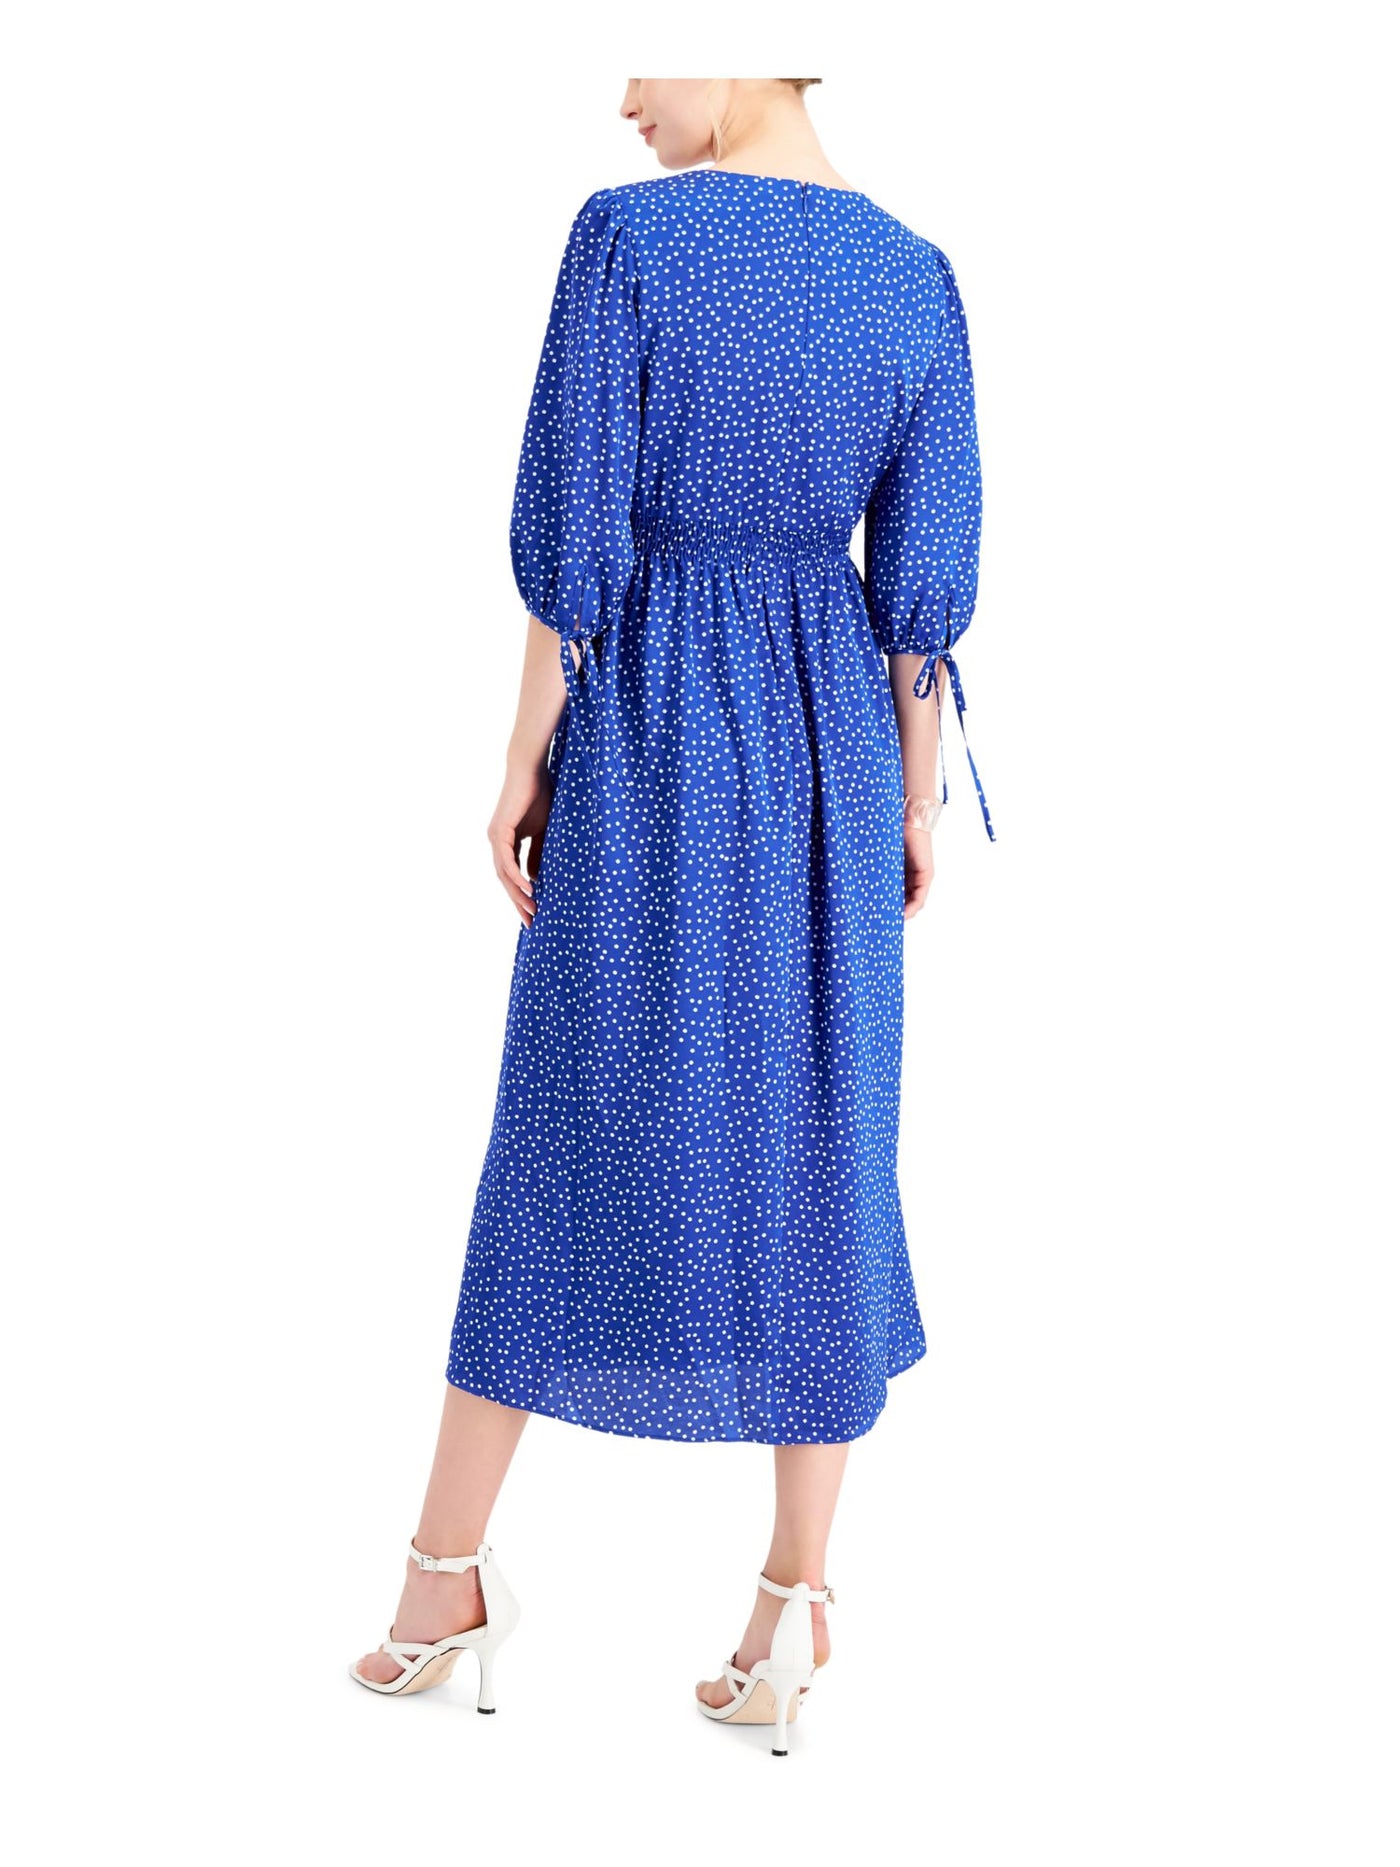 TAYLOR Womens Blue Smocked Zippered Tie Slitted Polka Dot Blouson Sleeve V Neck Midi Party Sheath Dress 8